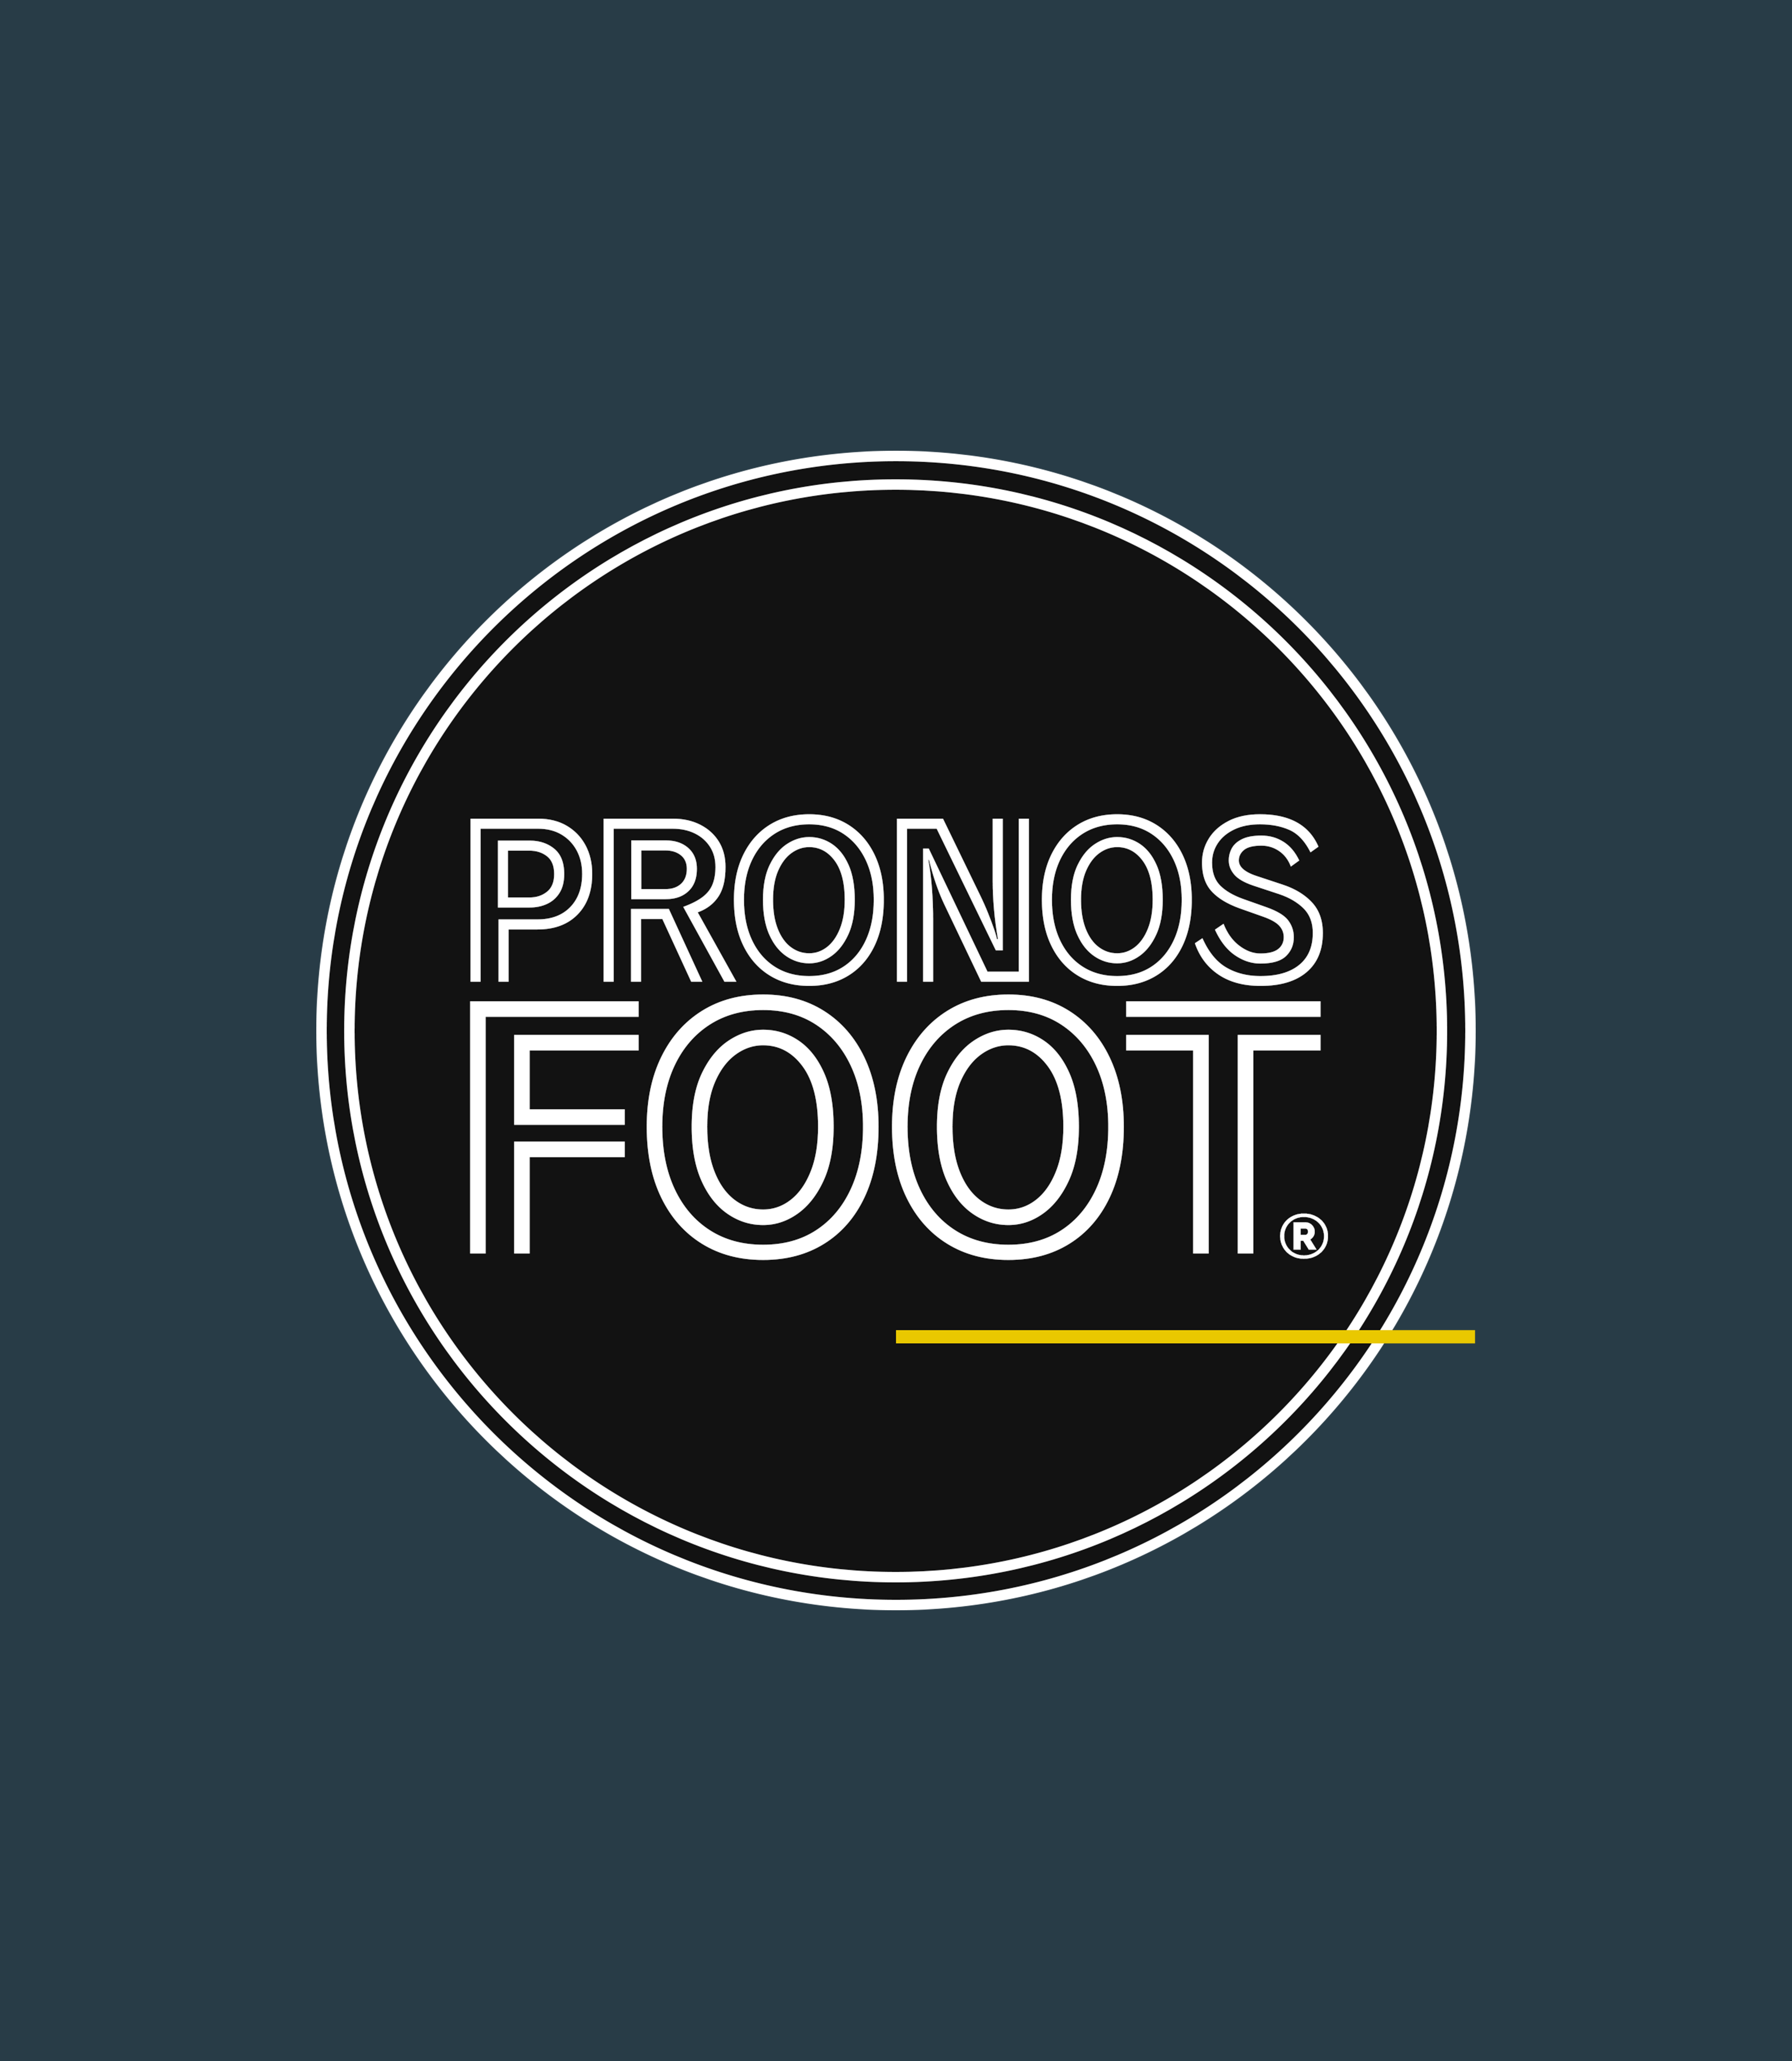 Portofolio-Hln_PronosFoot_logo